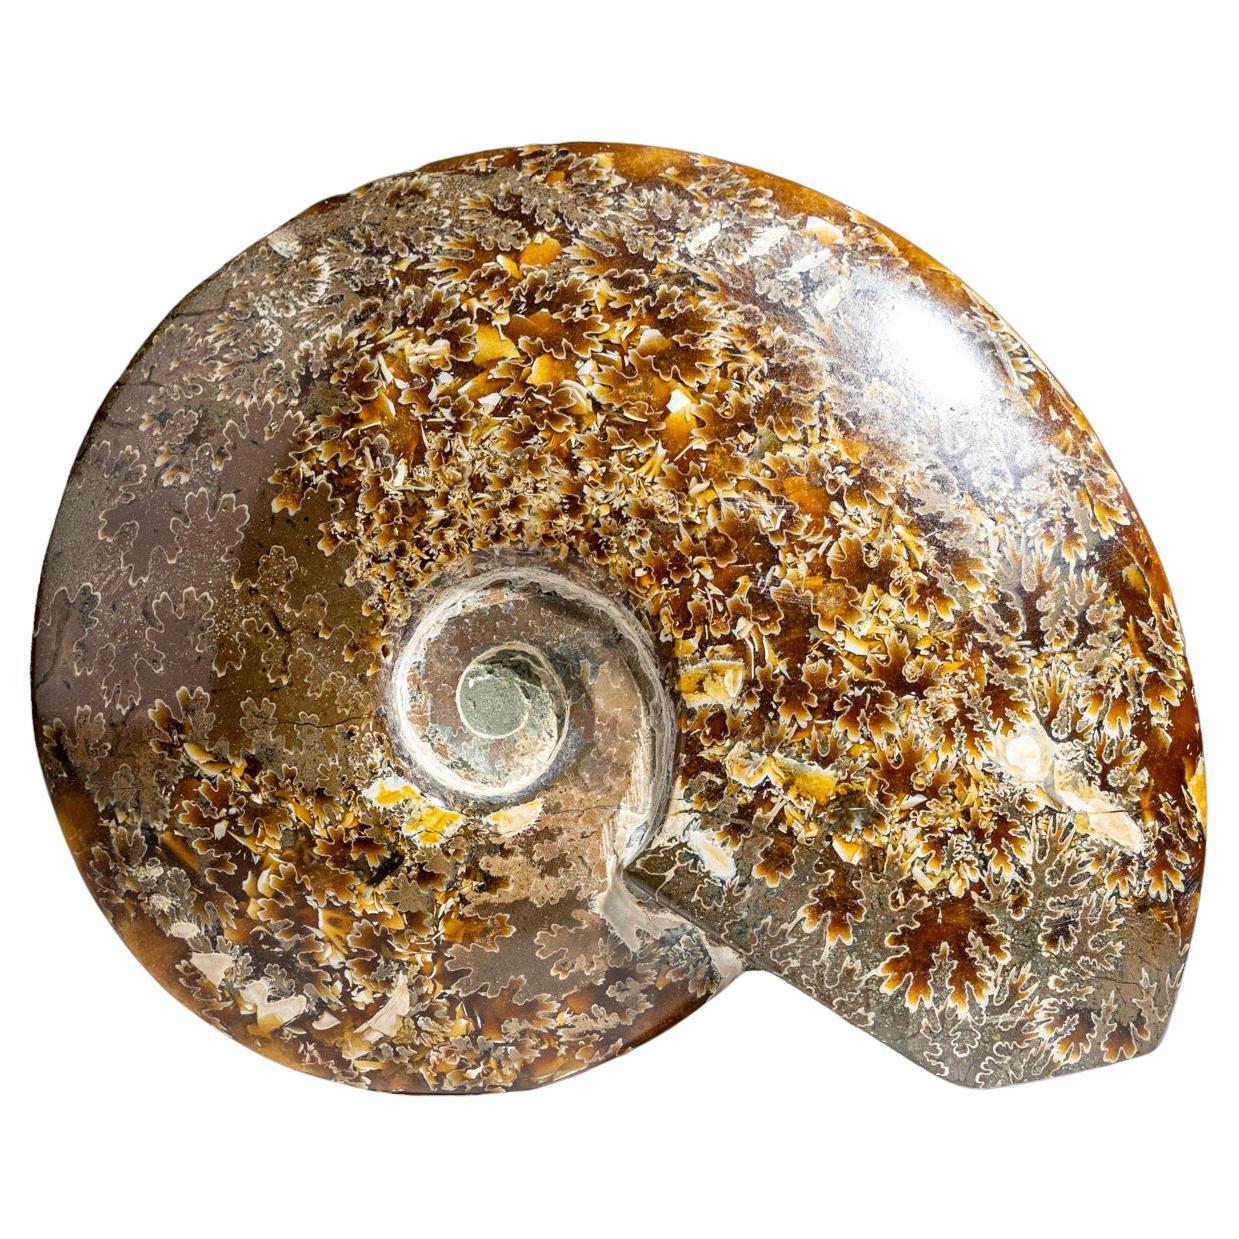 Are iridescent ammonites real?